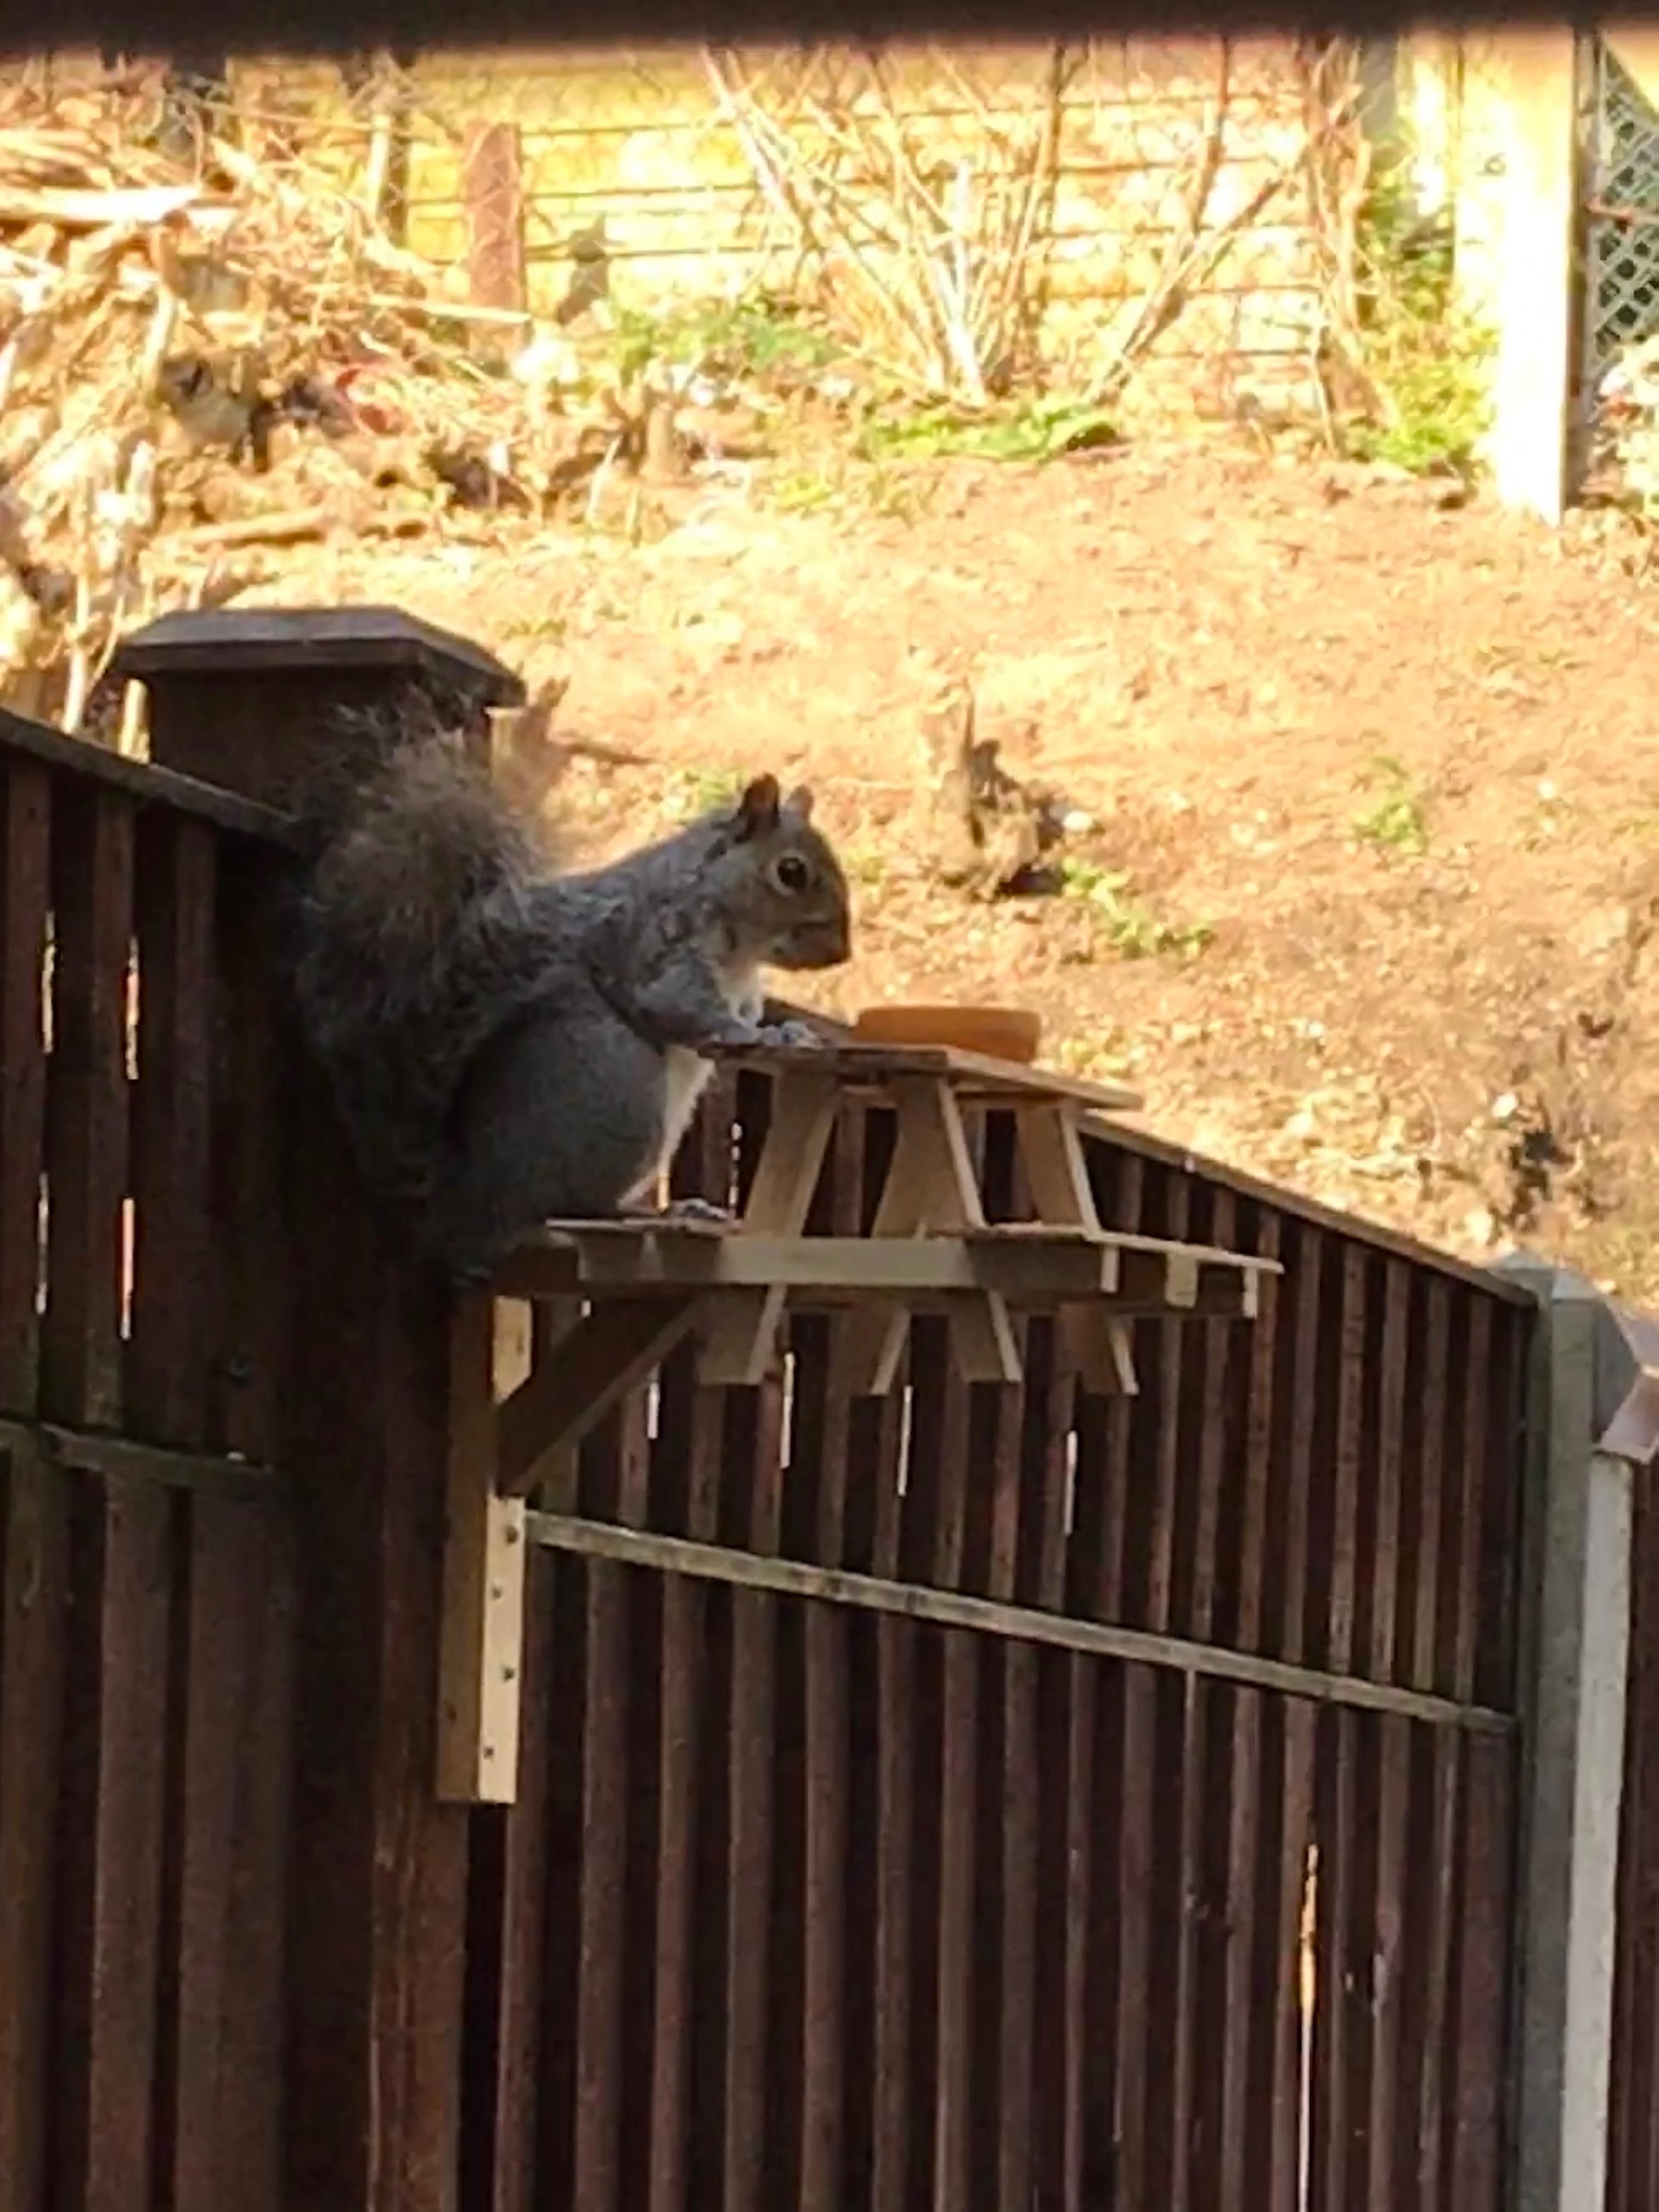 I also made a squirrel picnic bench.